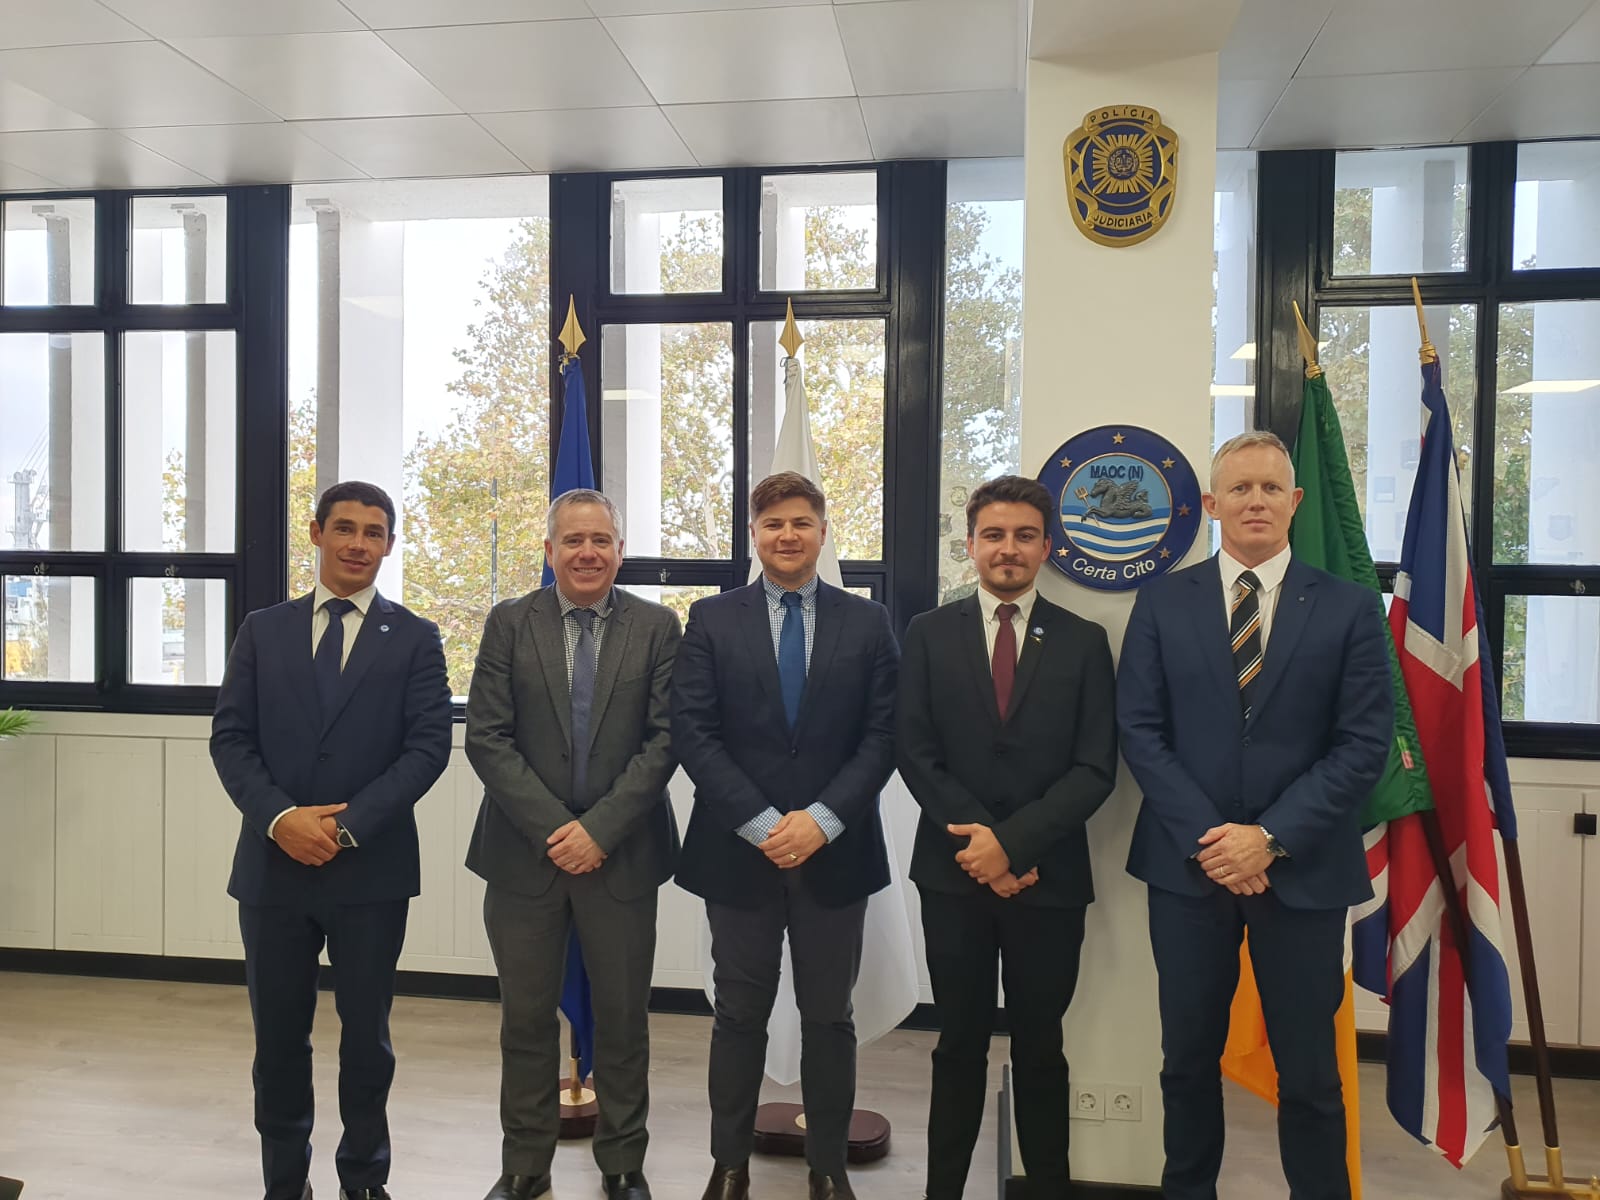 The Australian High Commission in London visits MAOC-N